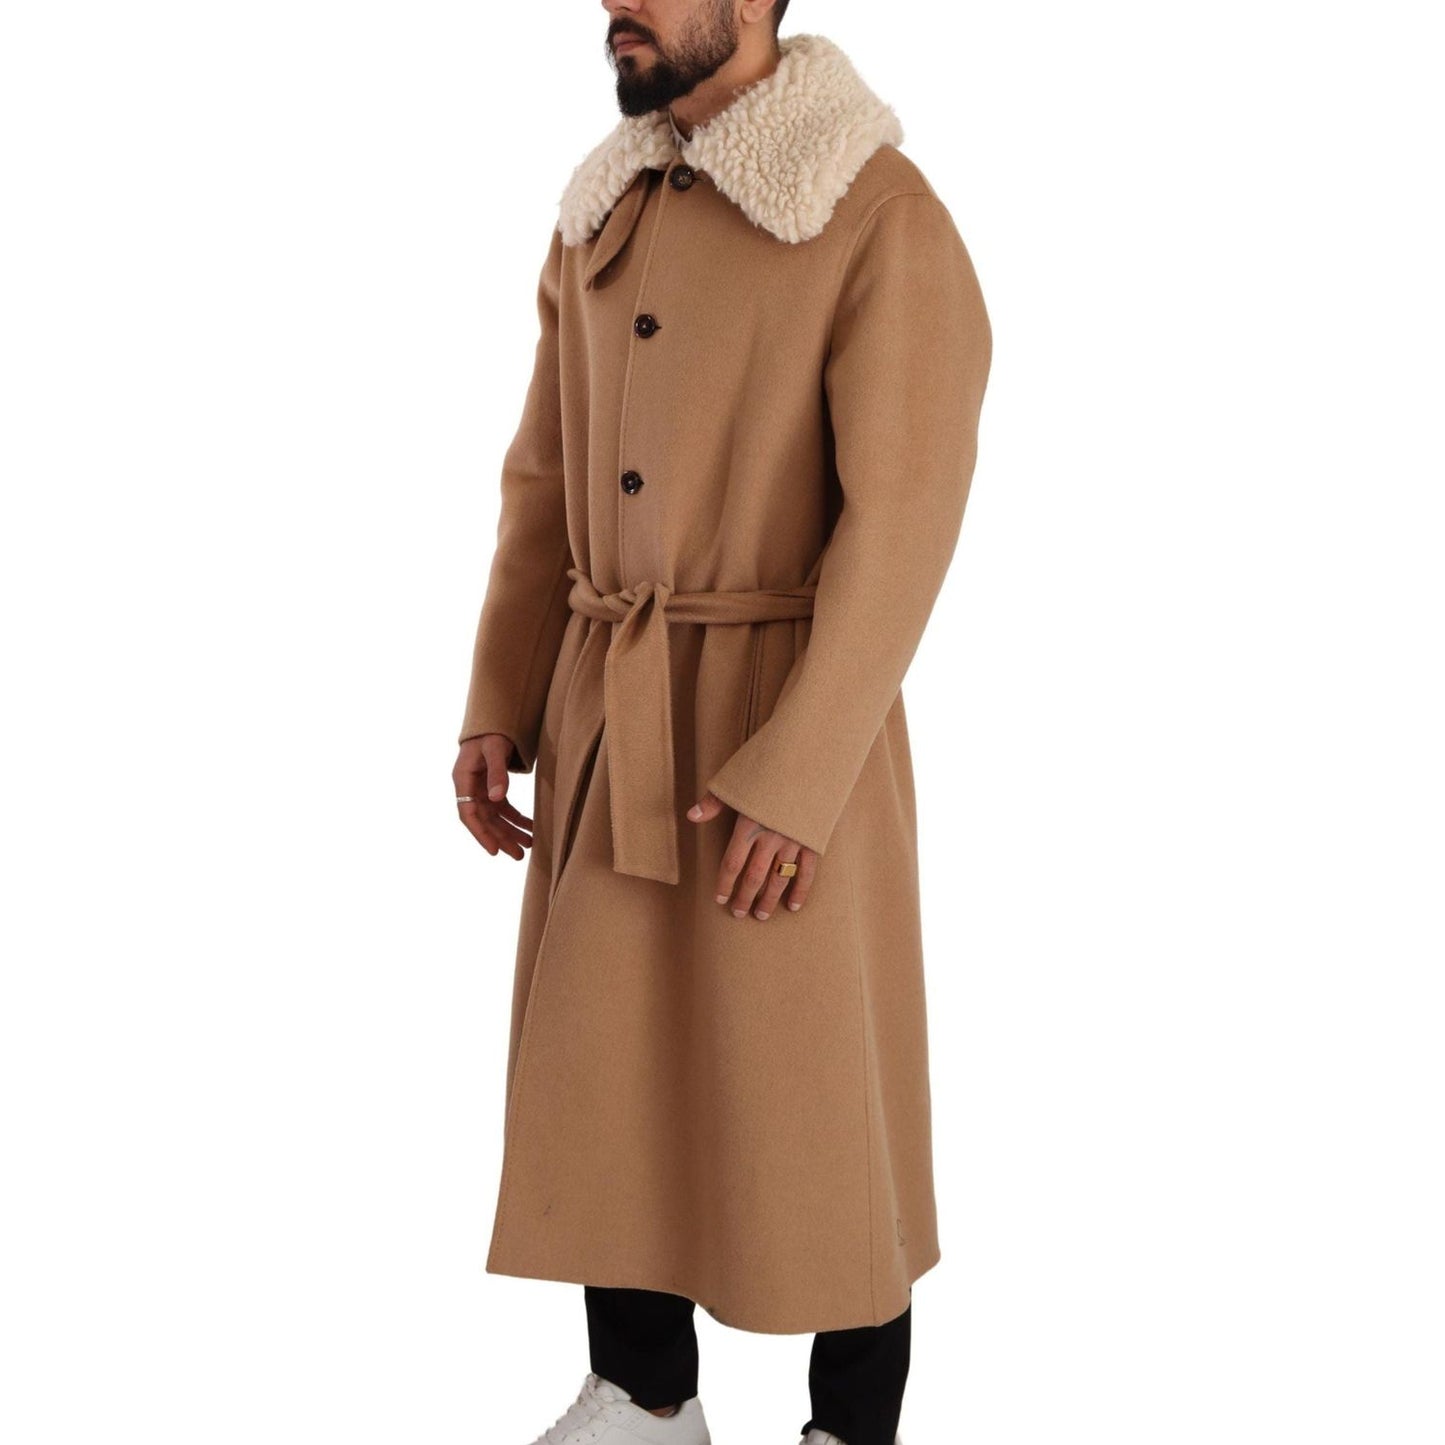 Dolce & Gabbana Opulent Beige Shearling-Collar Overcoat beige-camel-skin-cashmere-shearling-overcoat-jacket IMG_5026-scaled-41698870-ad7.jpg